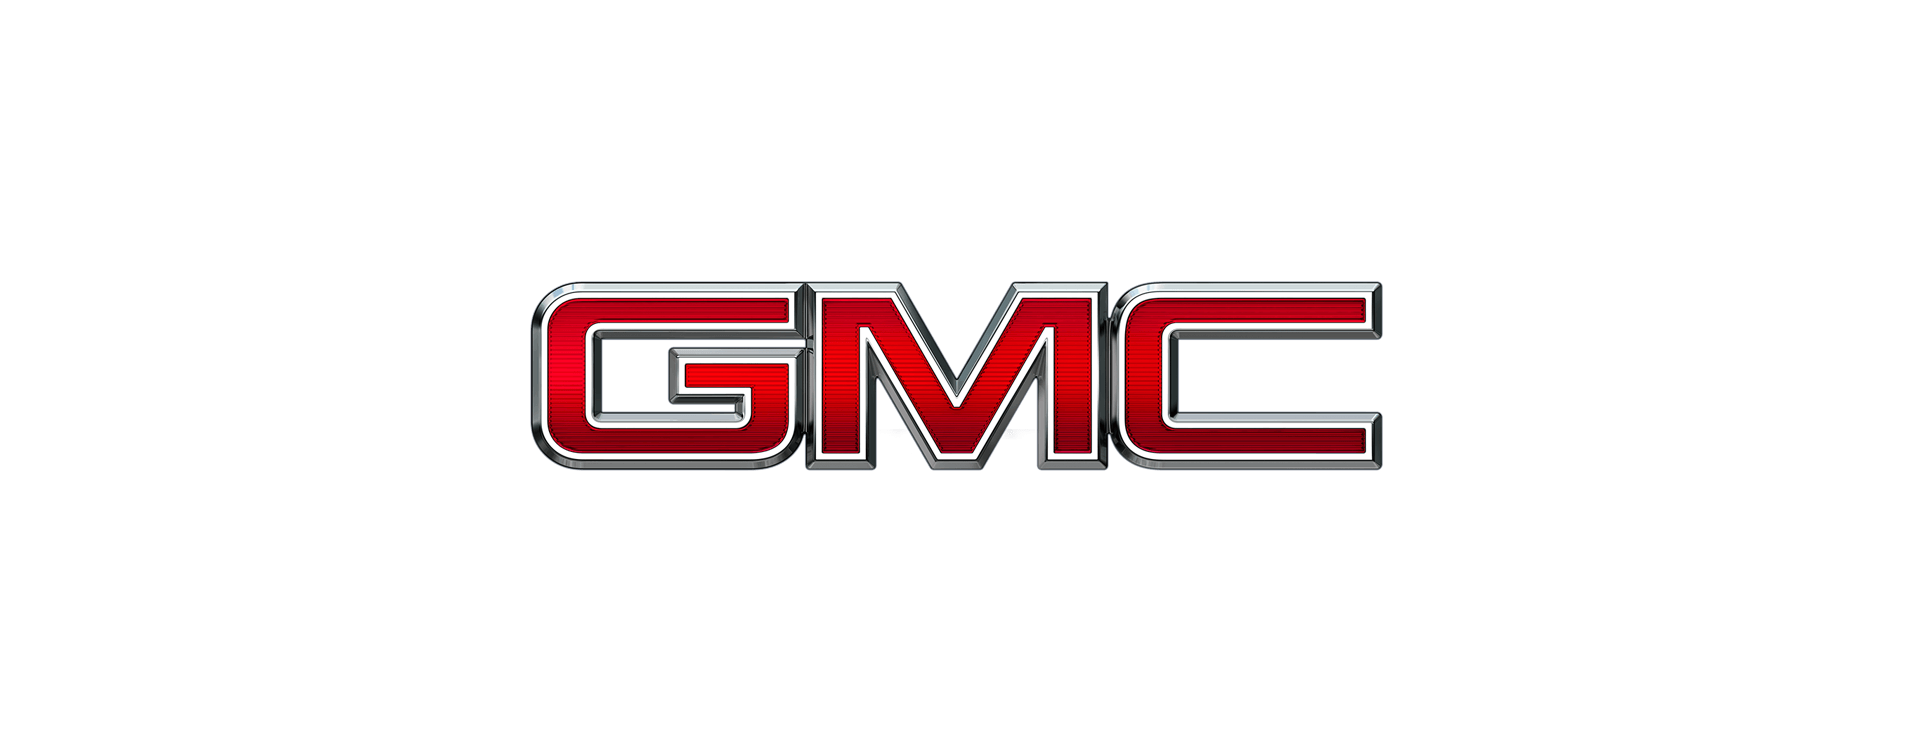 New General Motors Logo - Edmonds GM New and Used Vehicles Huntsville